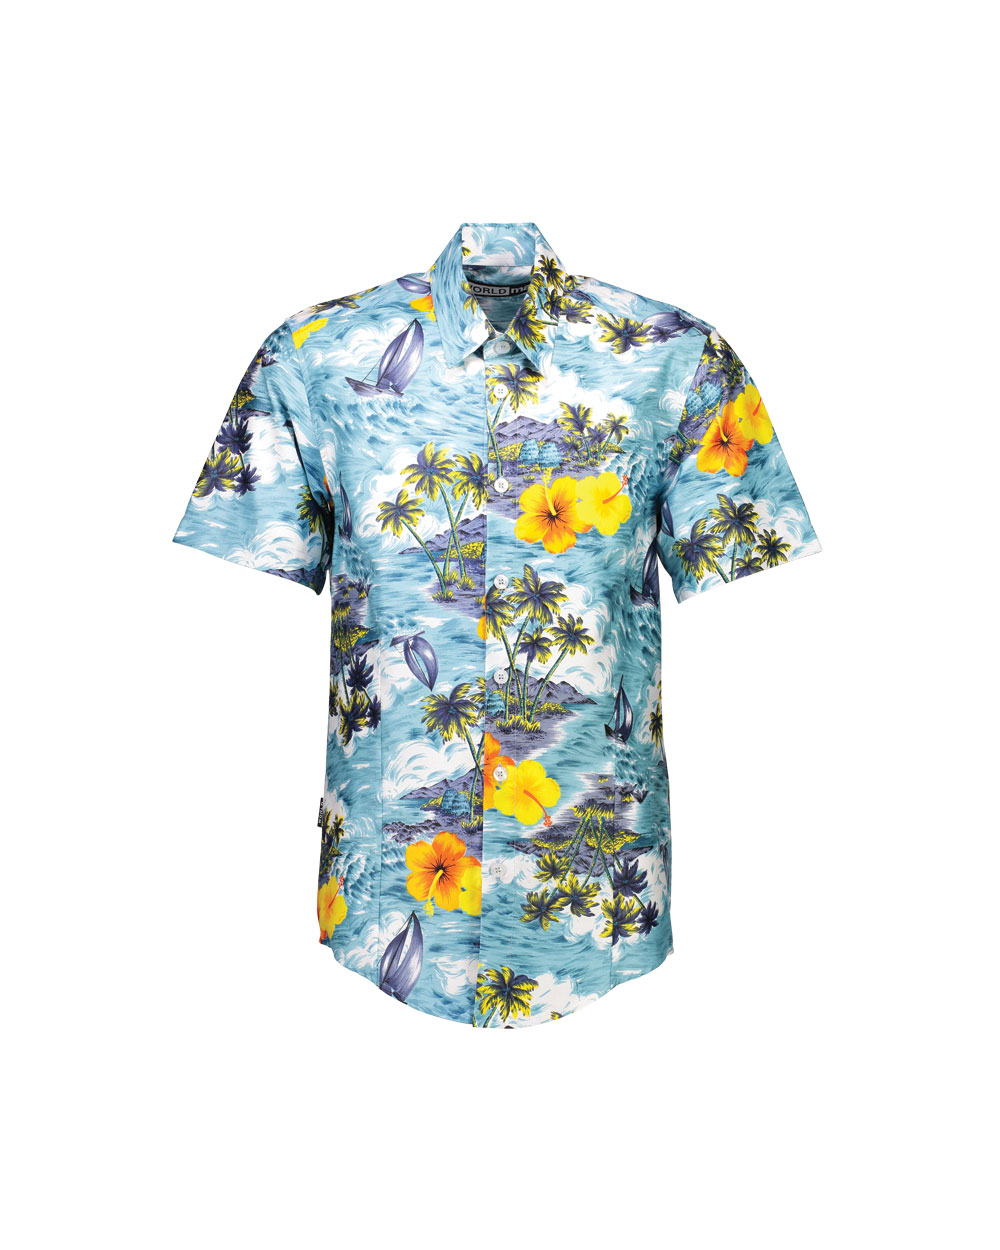 World shirt, $299